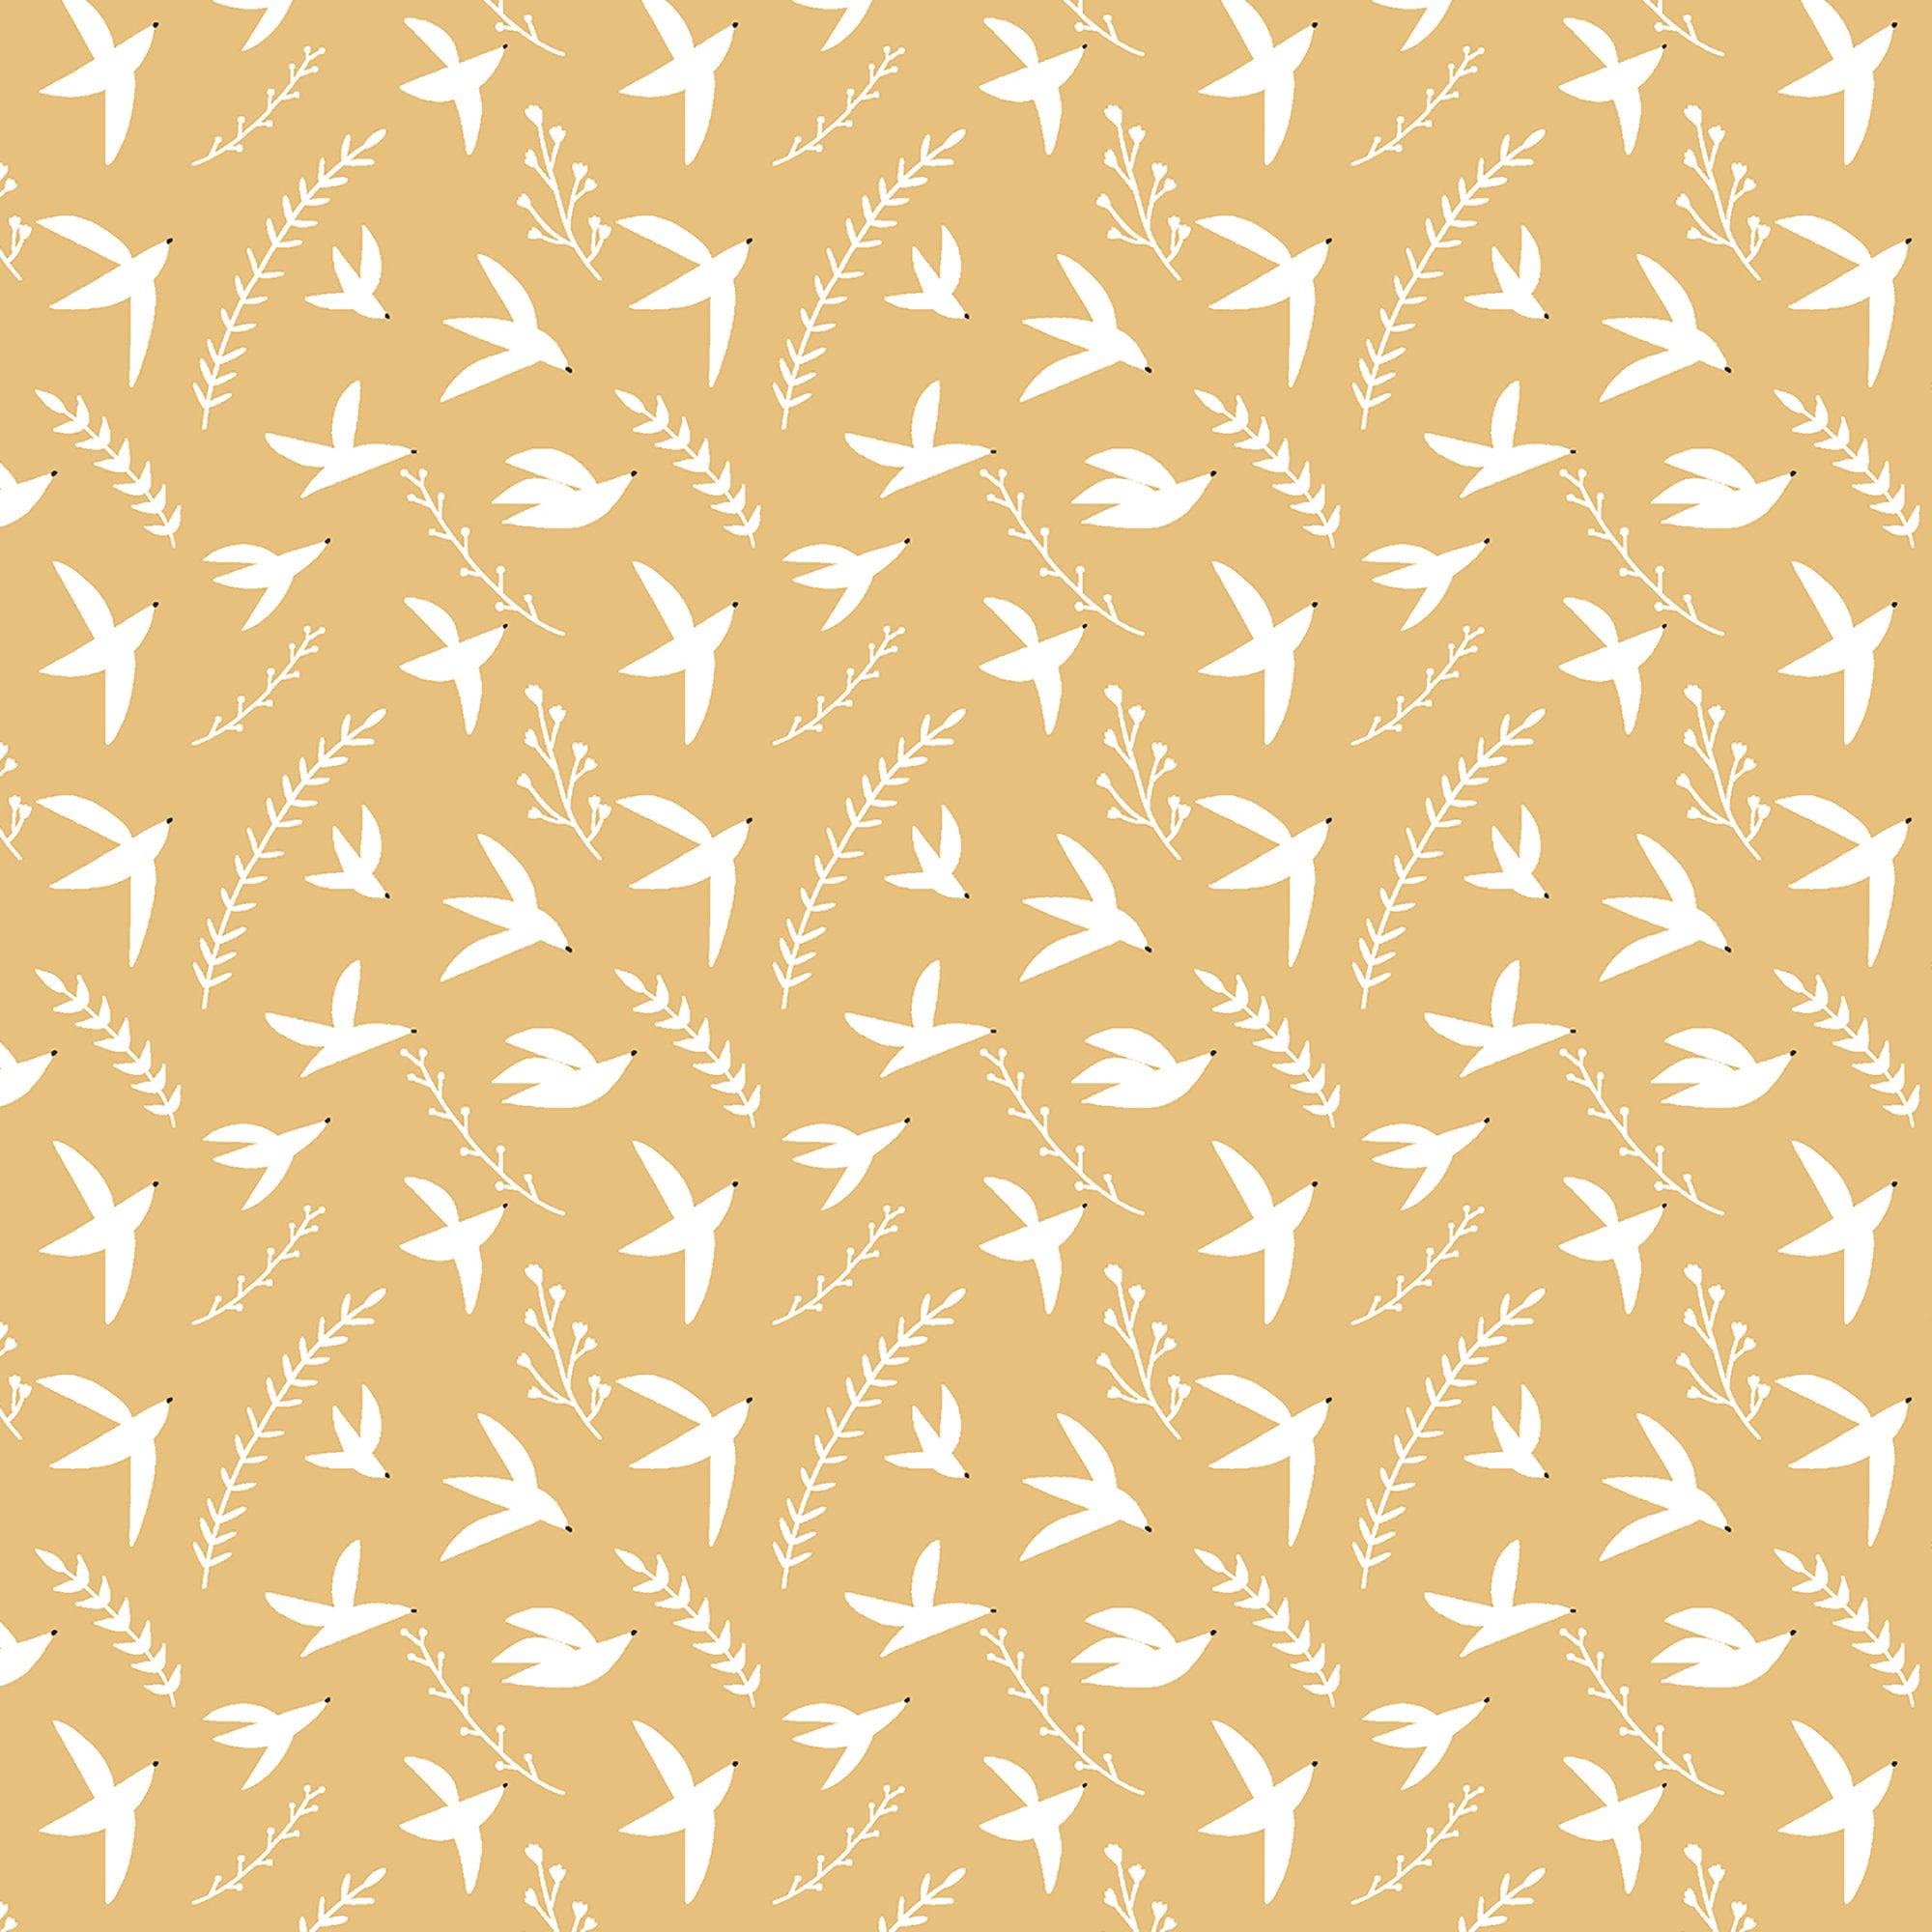 Pond Life - Birds in Flight Dijon Fabric